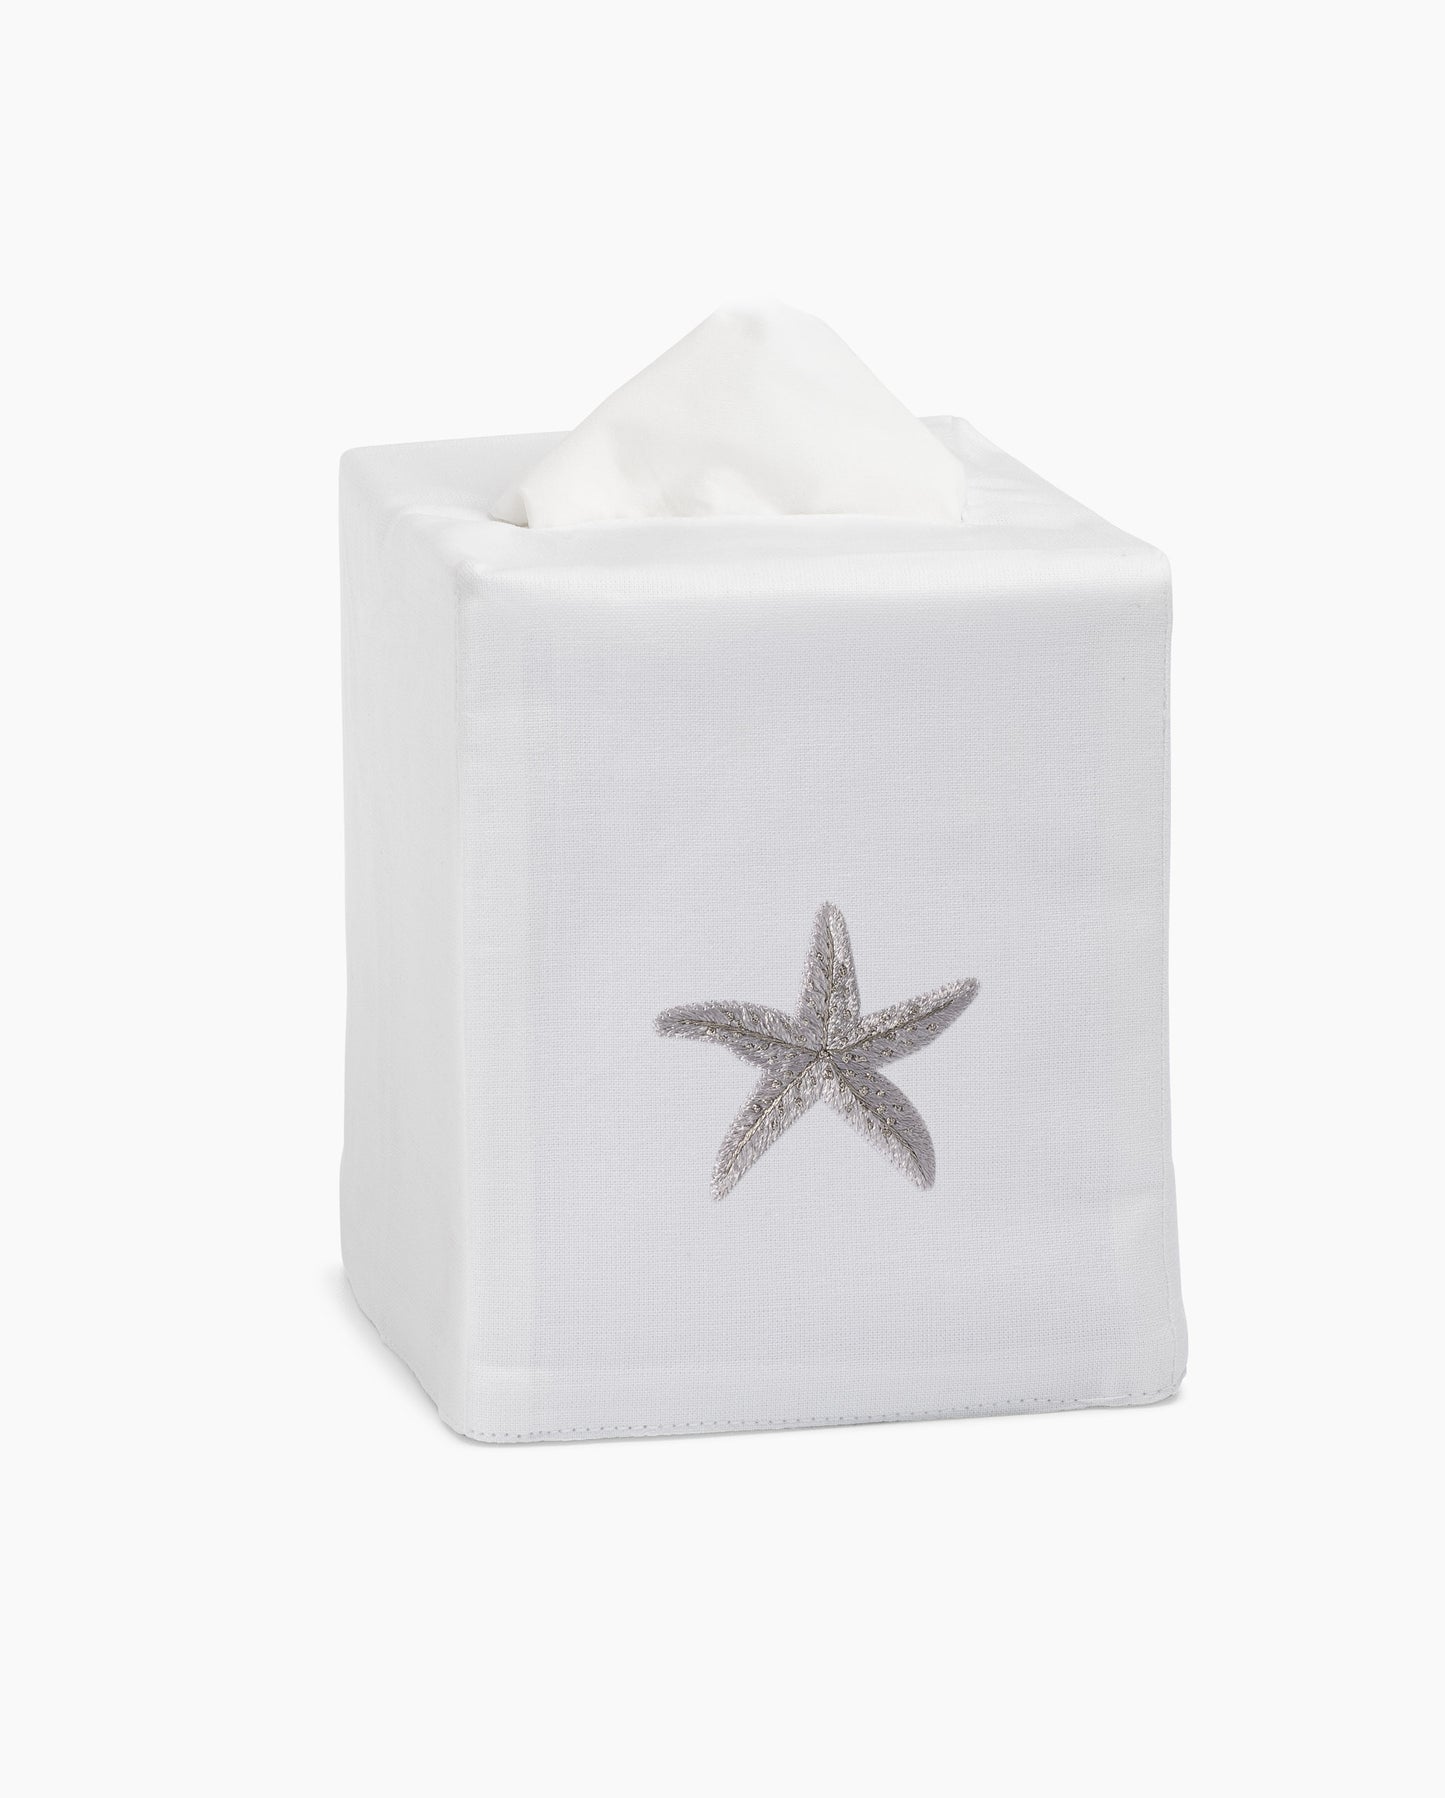 Starfish Luxe Tissue Box Cover